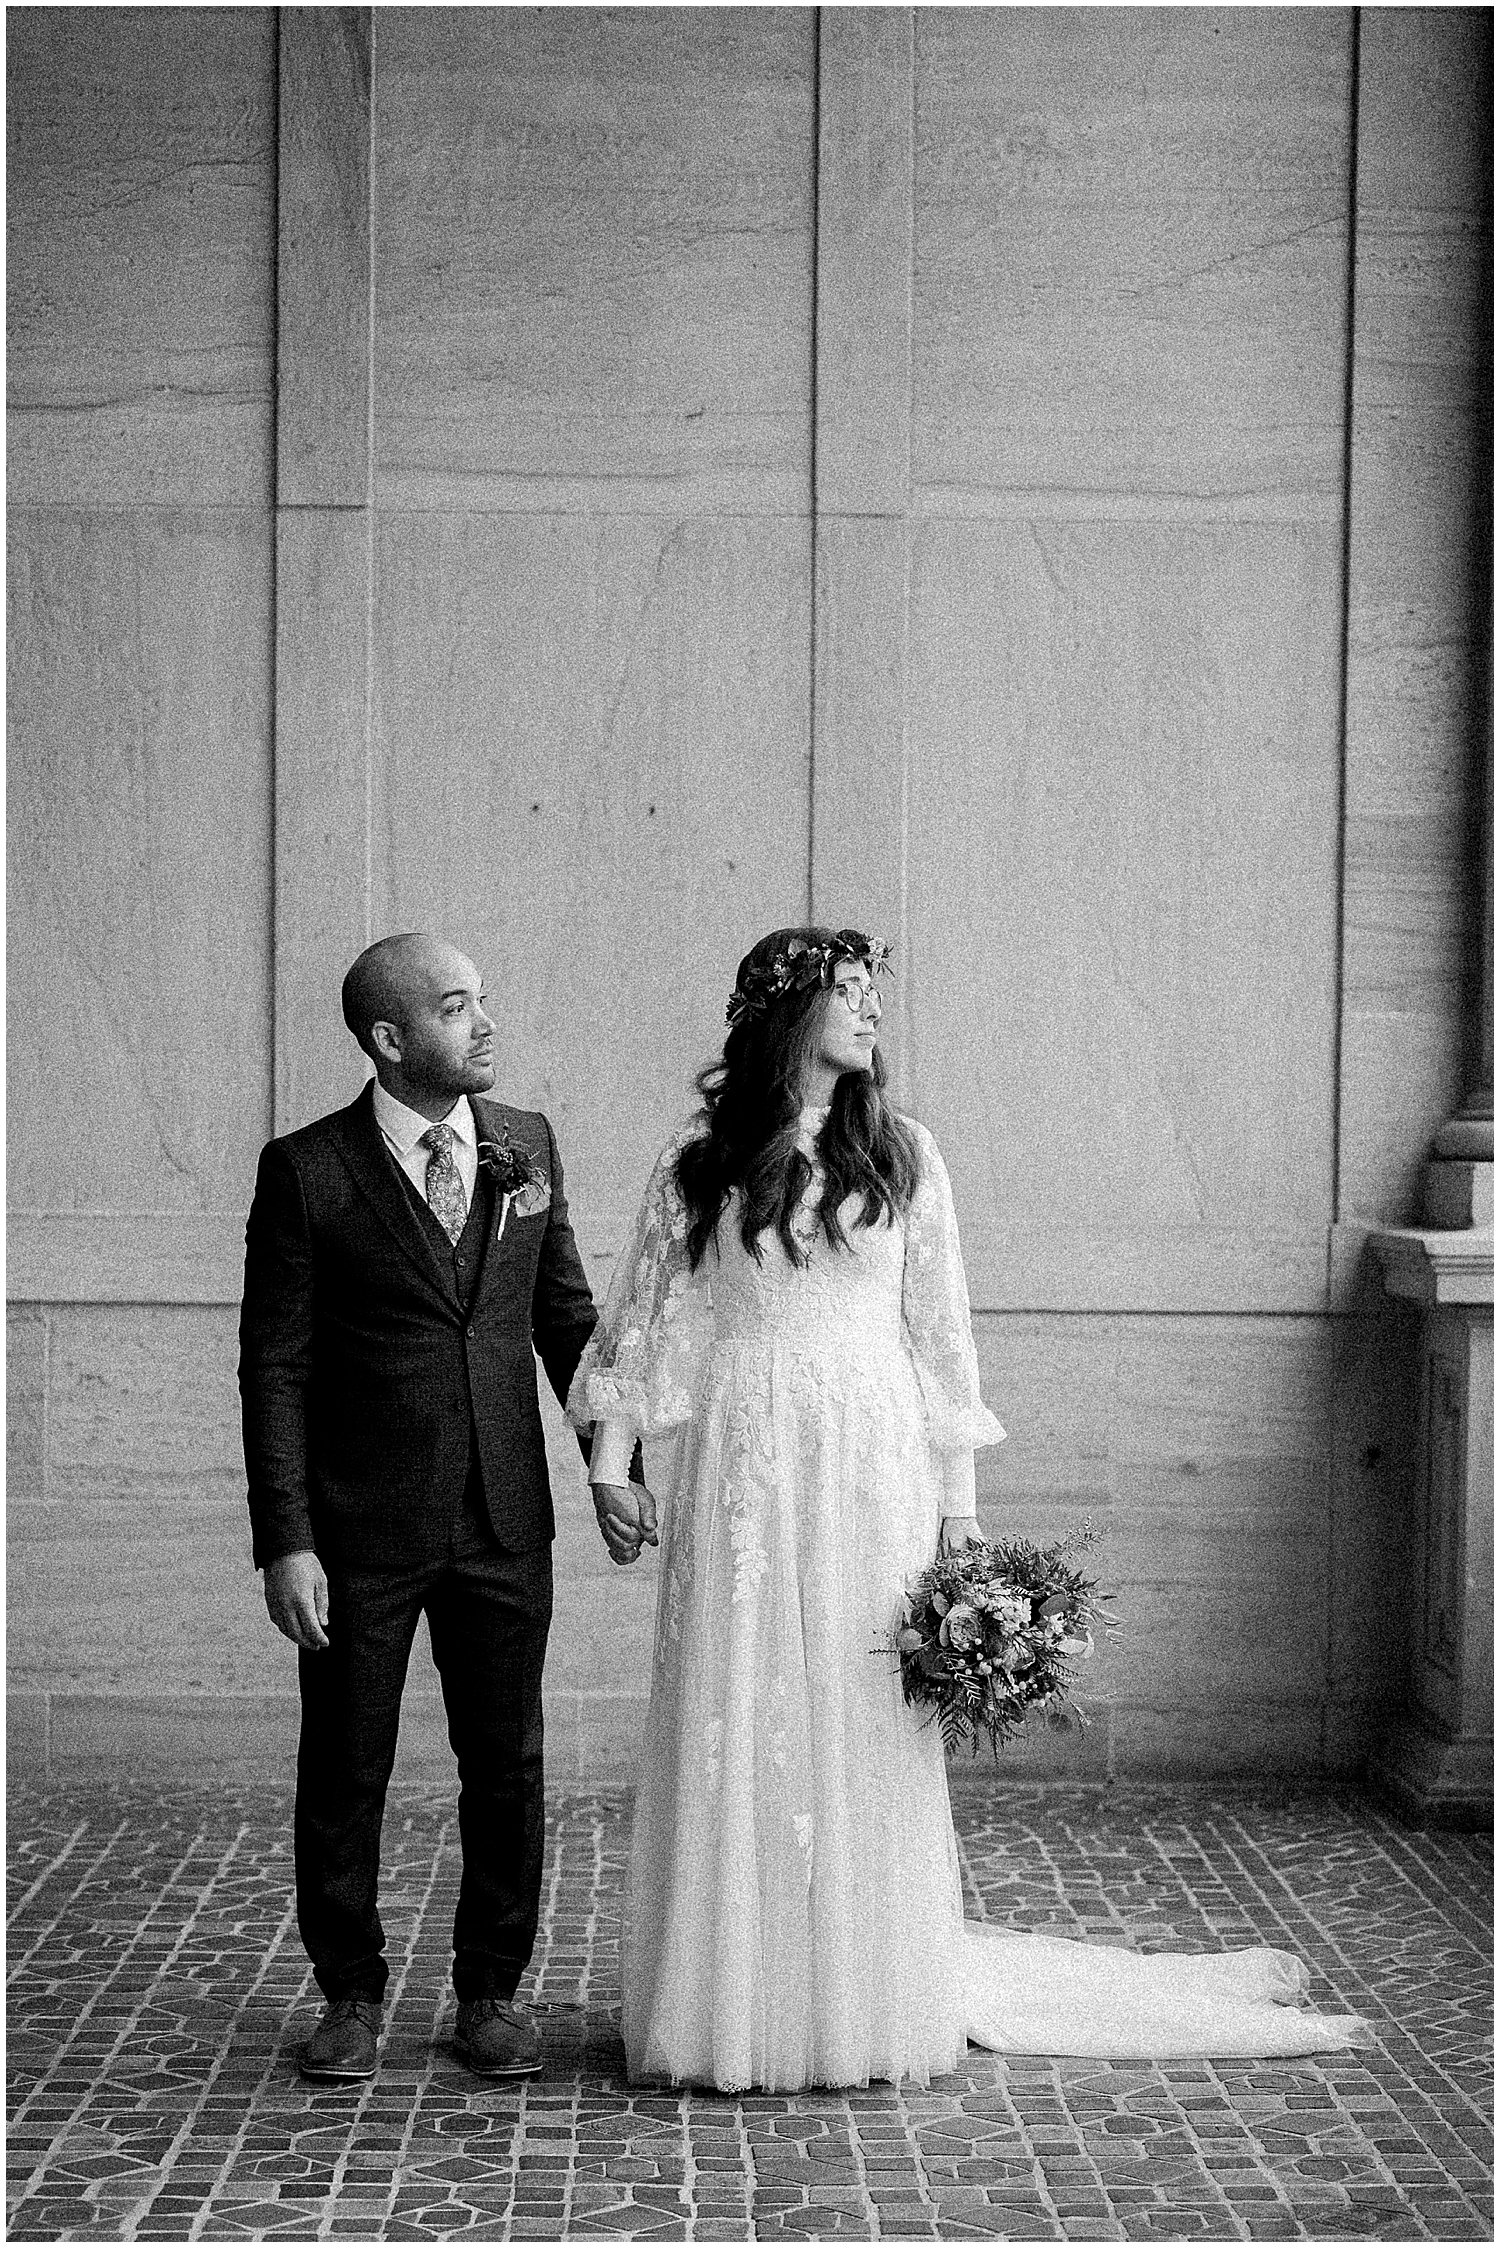 Dayton Art Institute Wedding | Chelsea Hall Photography